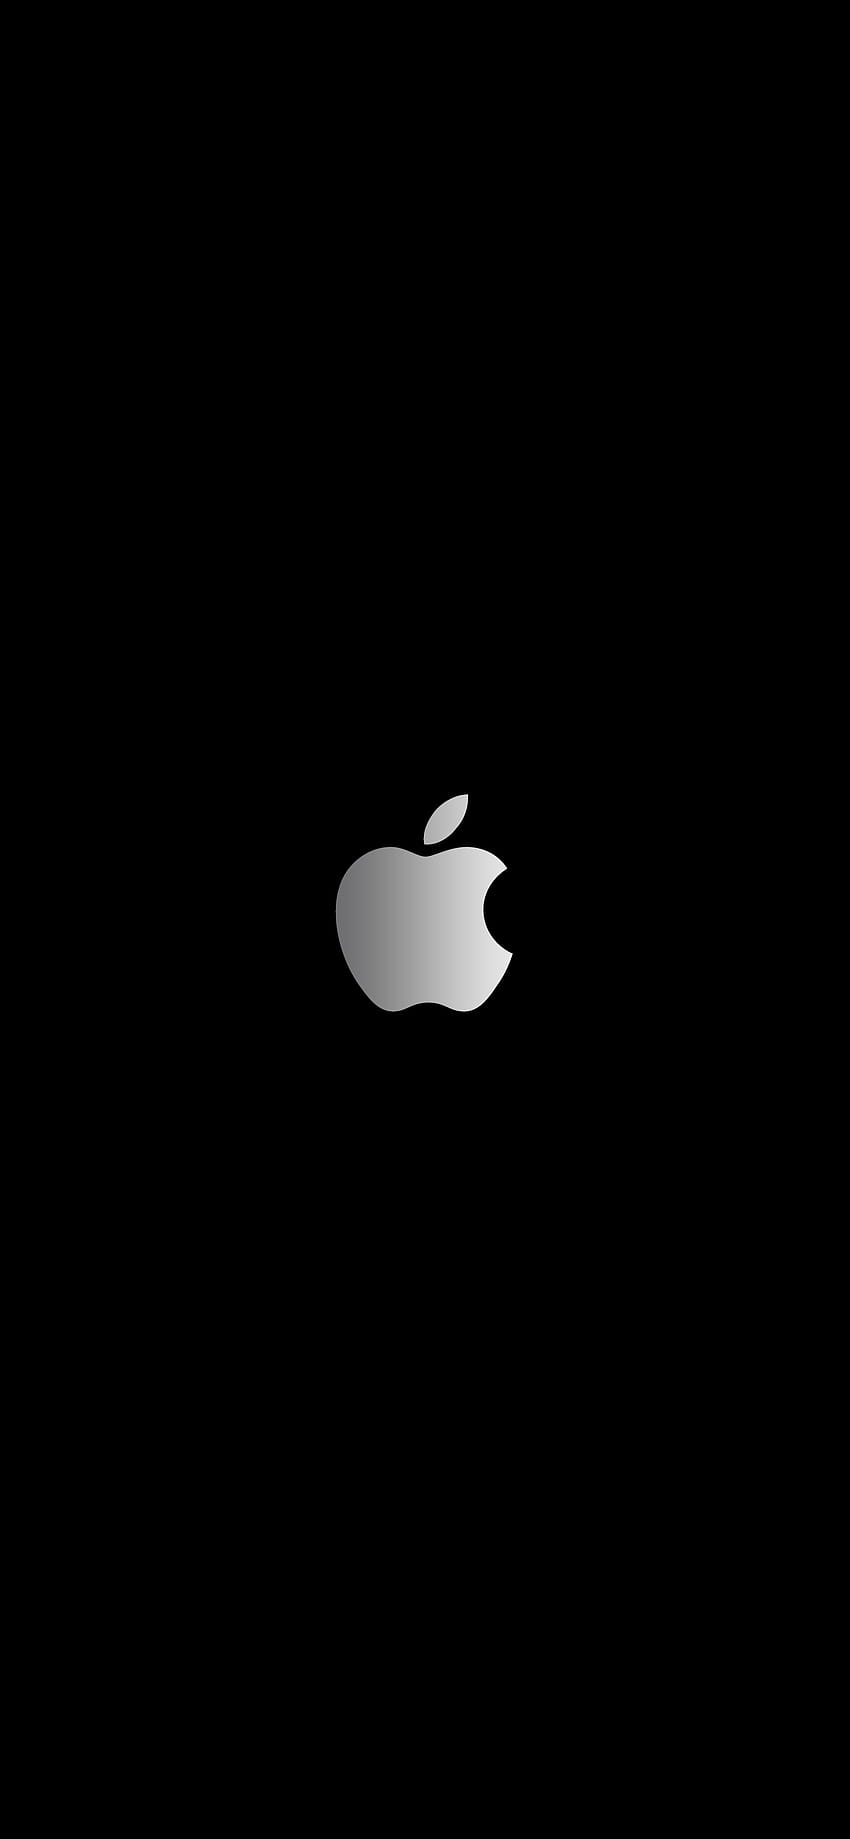 2 Apple Iphone 11, logo Apple iPhone 11 pro max Tapeta na telefon HD